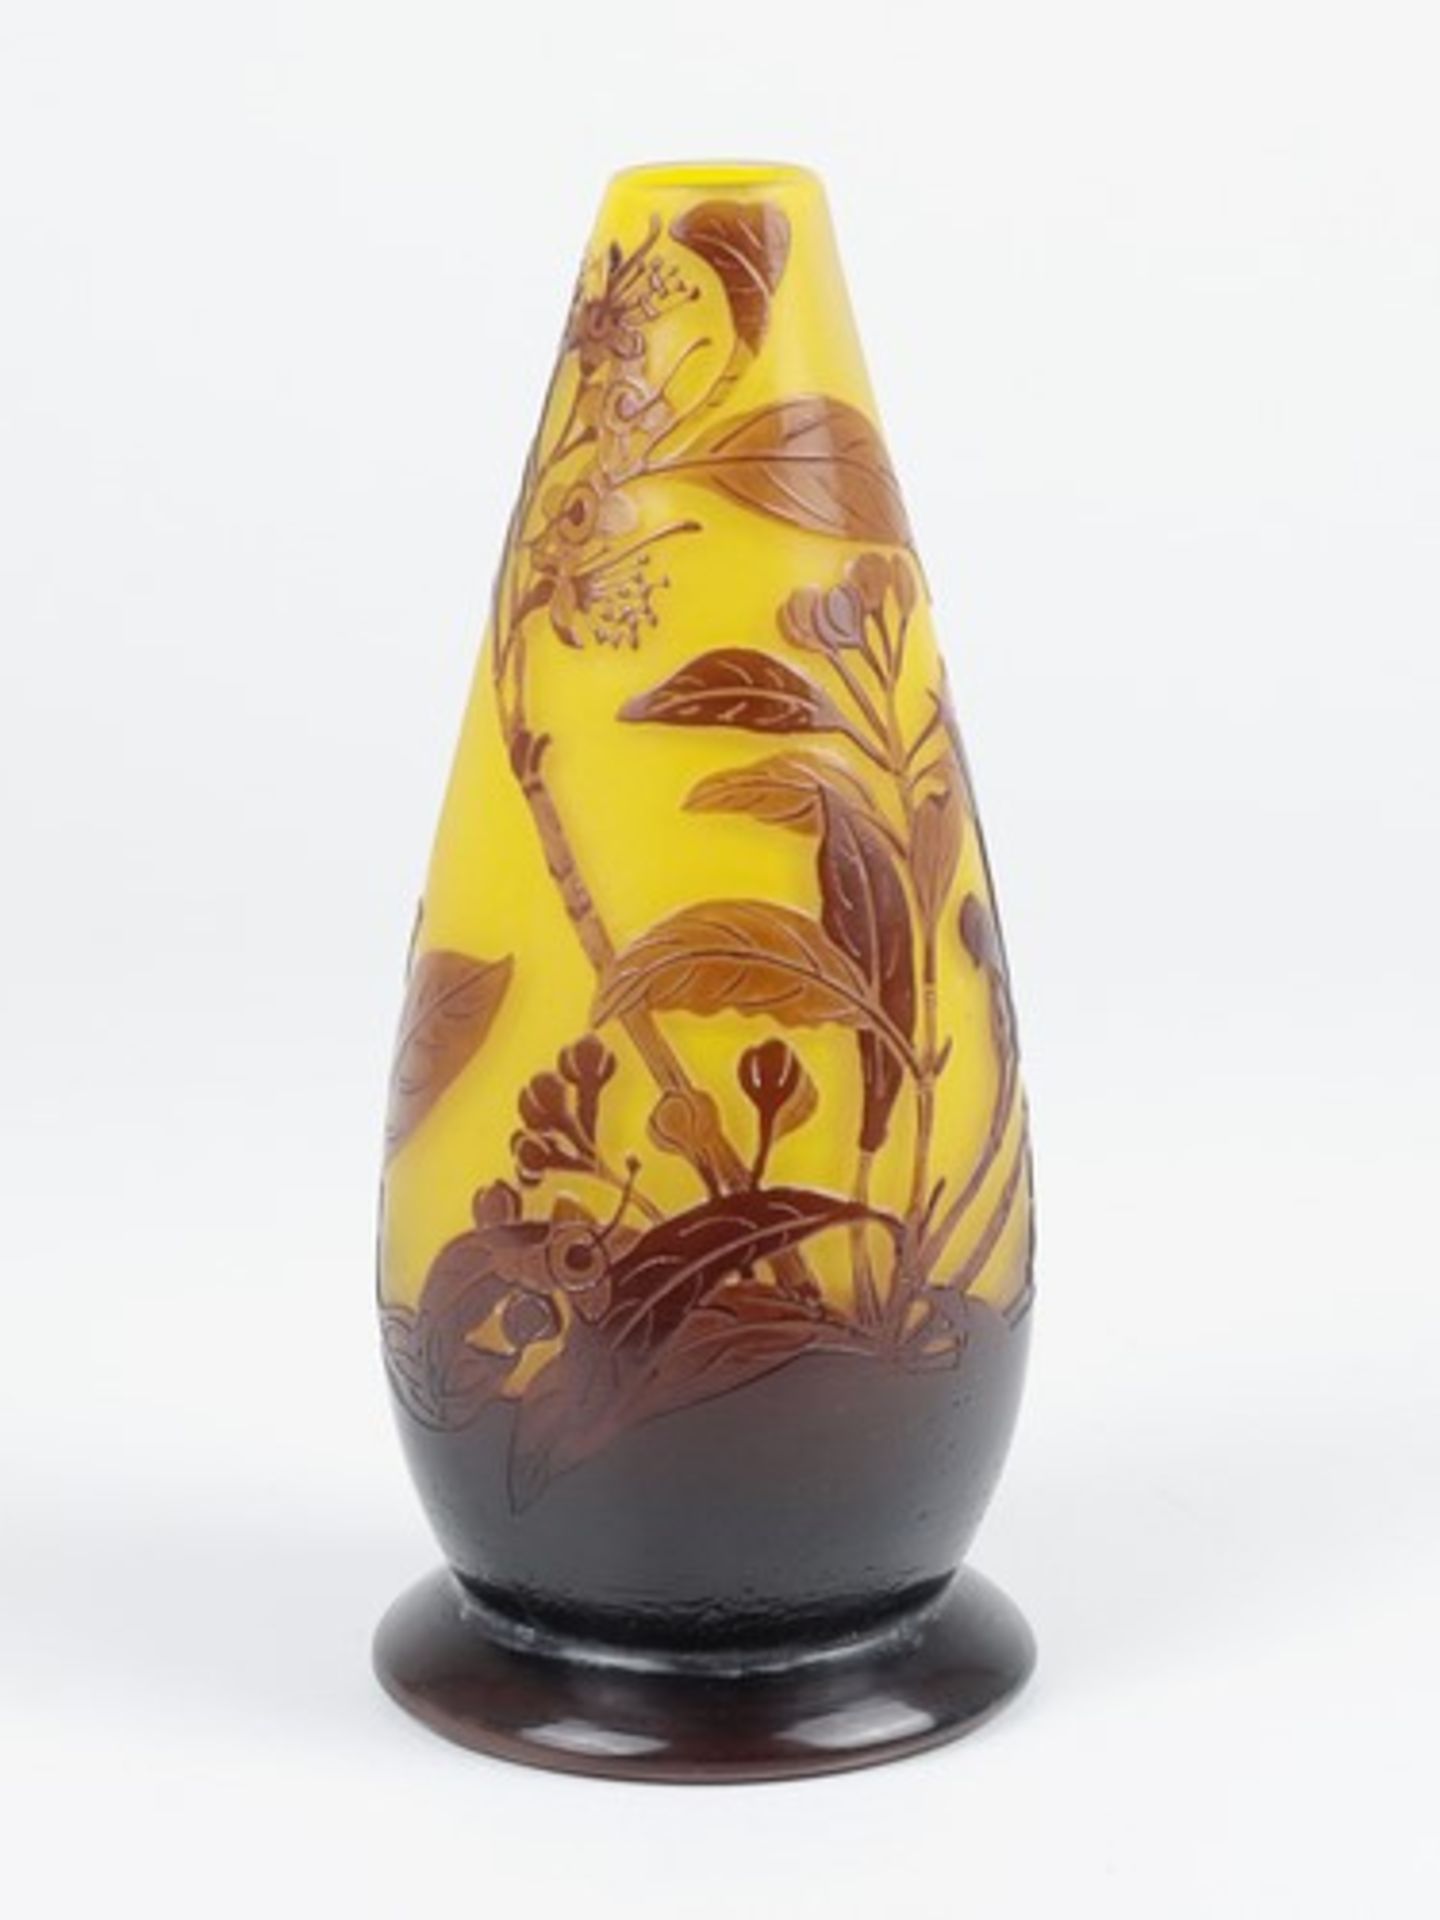 Gallé - Vase um 1900, Jugendstil, Emile Gallé, Frankreich, farbloses mattiertes Glas, runder Stand, - Bild 2 aus 5